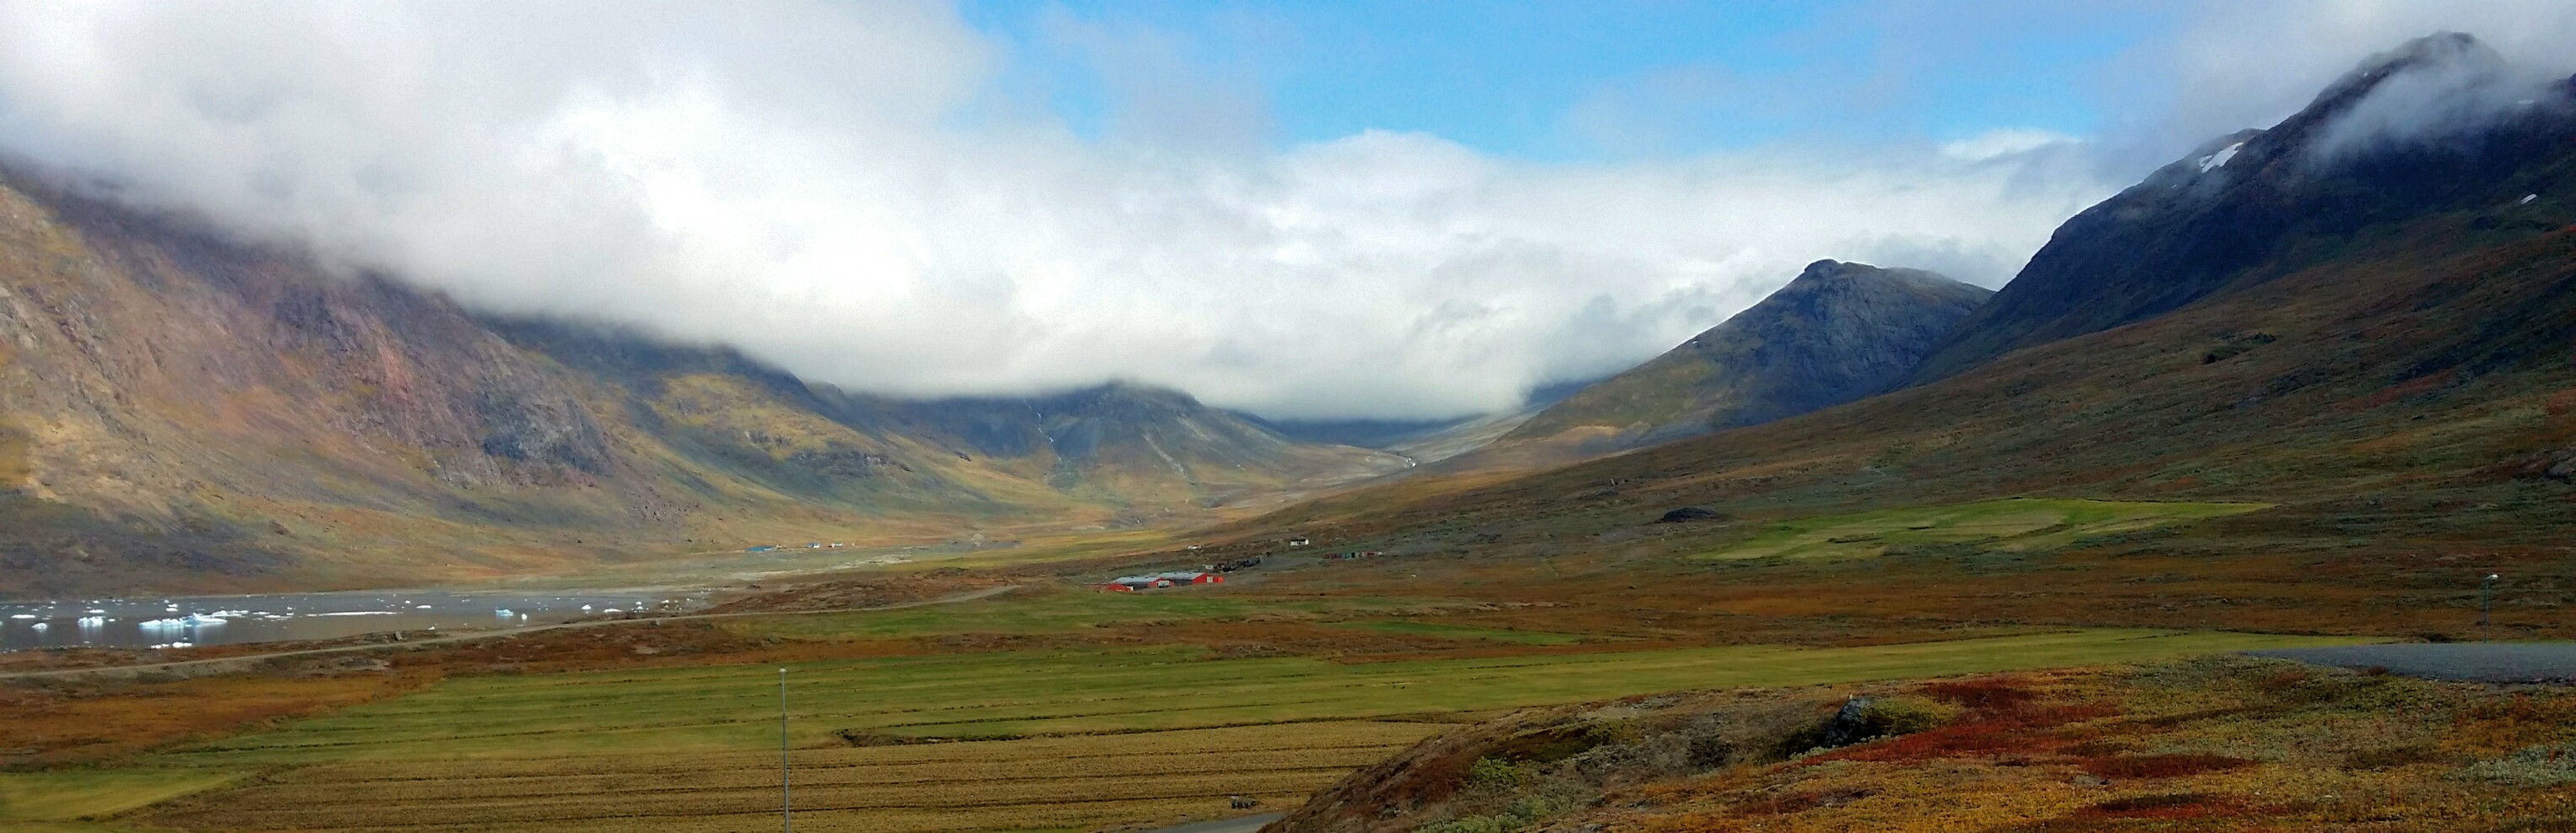 landscape-narsaq-greenland-192092463003202-by-timkoopjensen